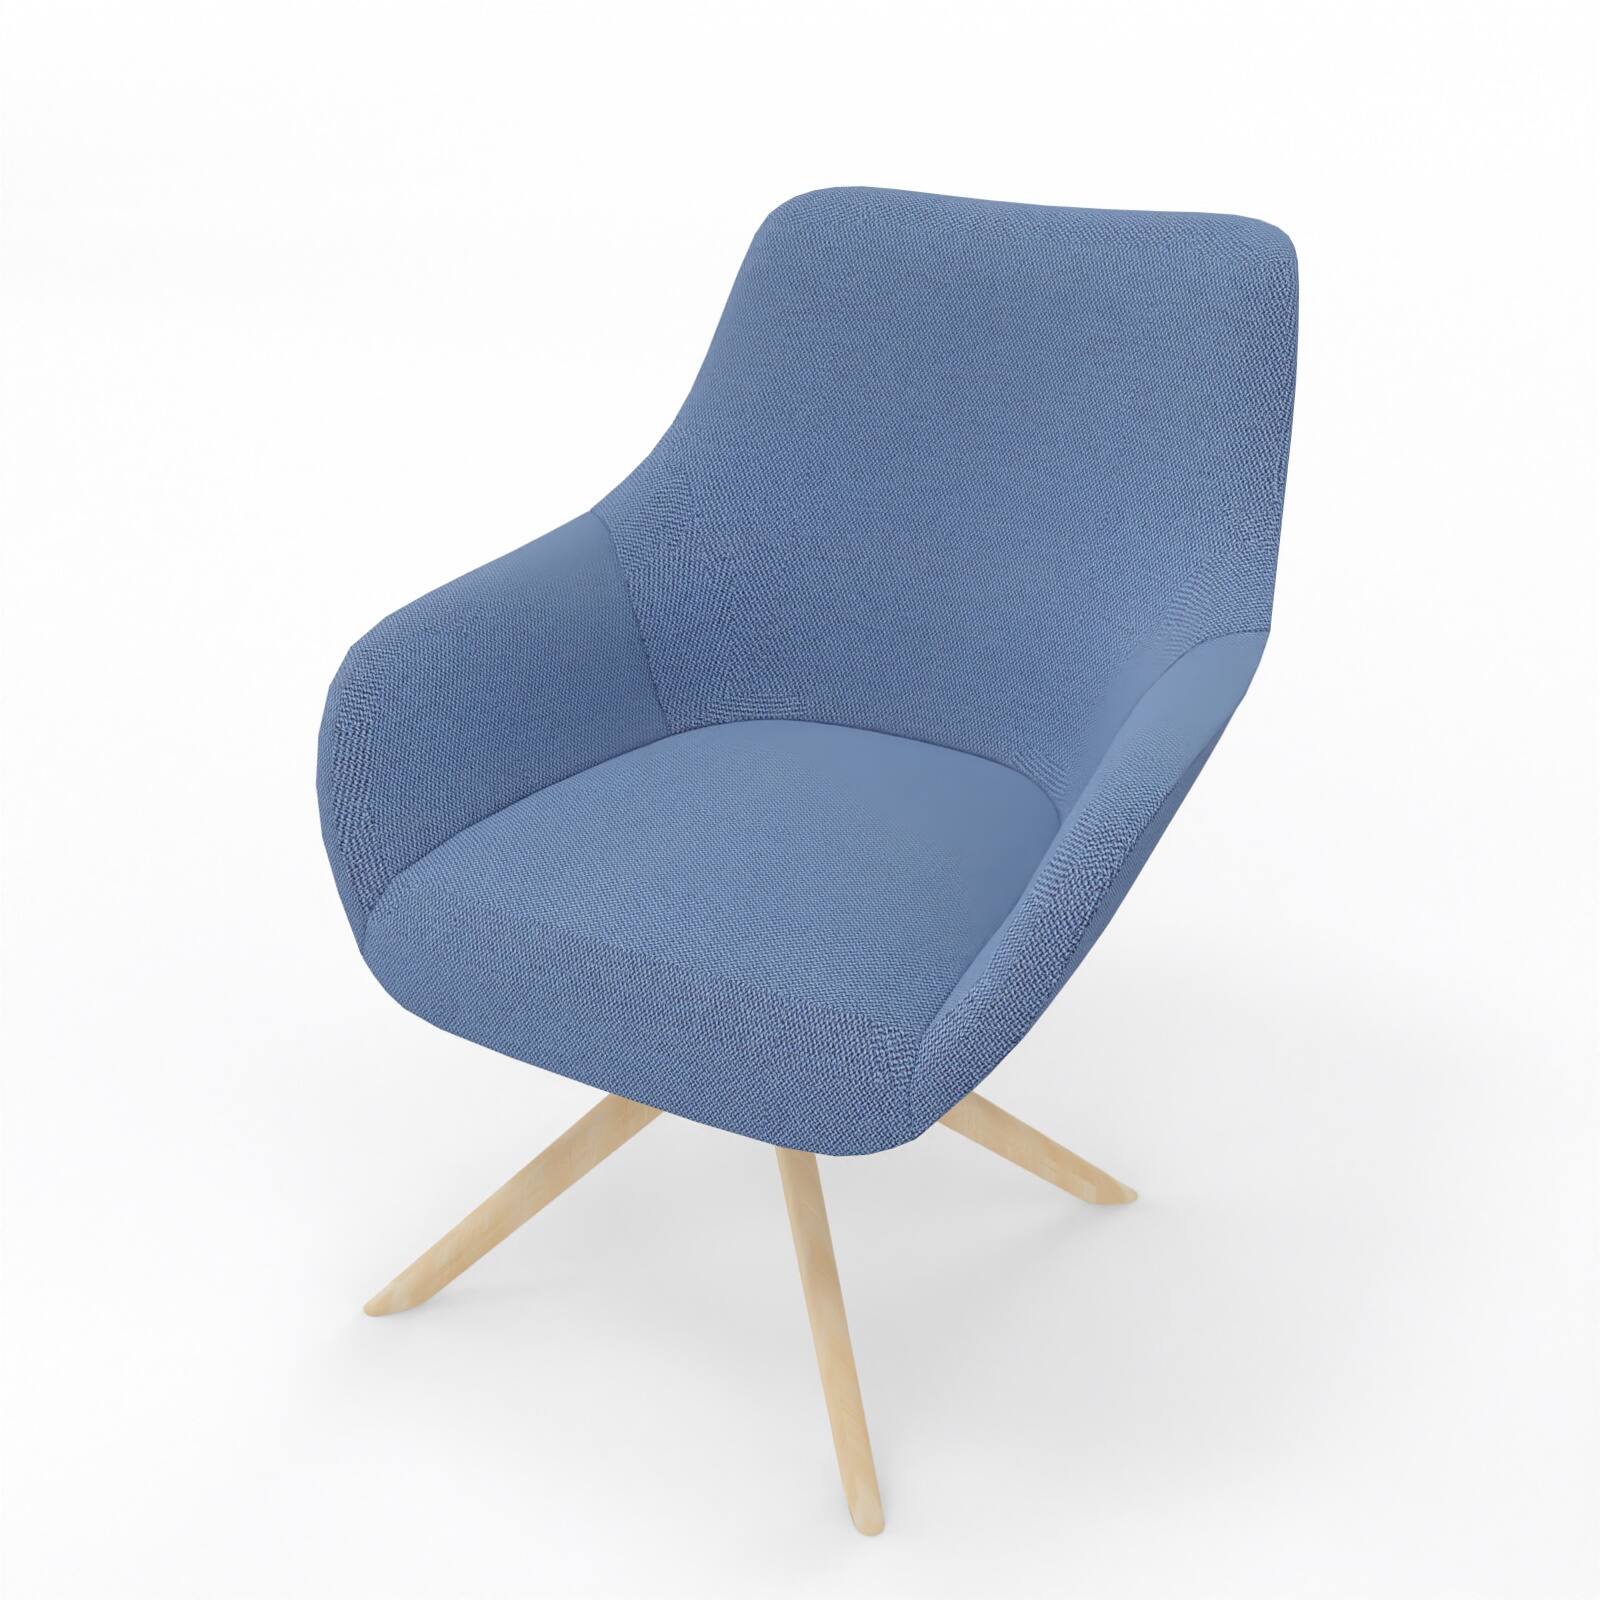 Blauwe Lamy Lounge fauteuil van Markant Office